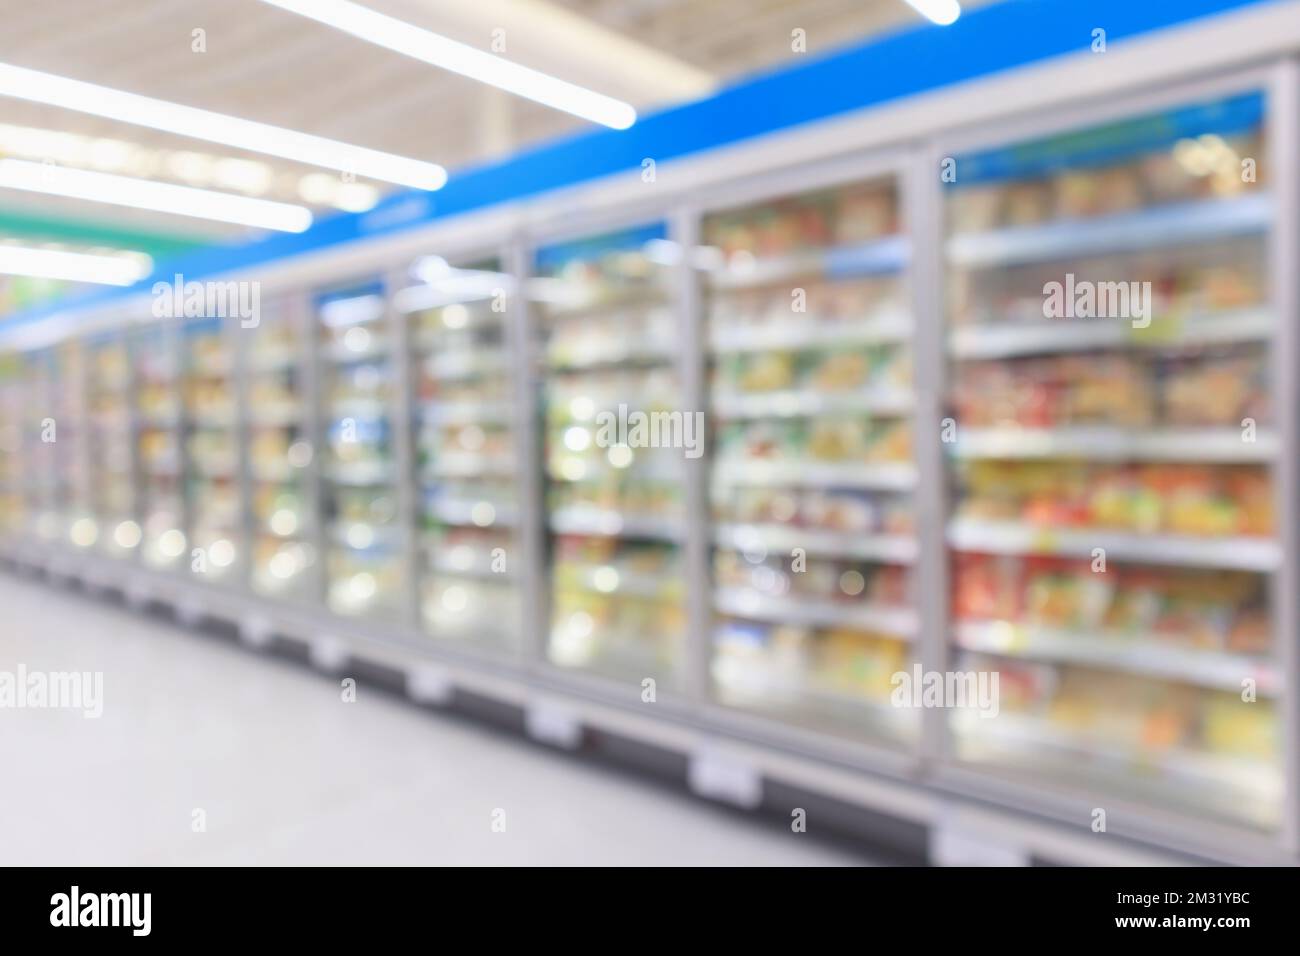 supermarket commercial refrigerators freezer showing frozen foods abstract blur background Stock Photo